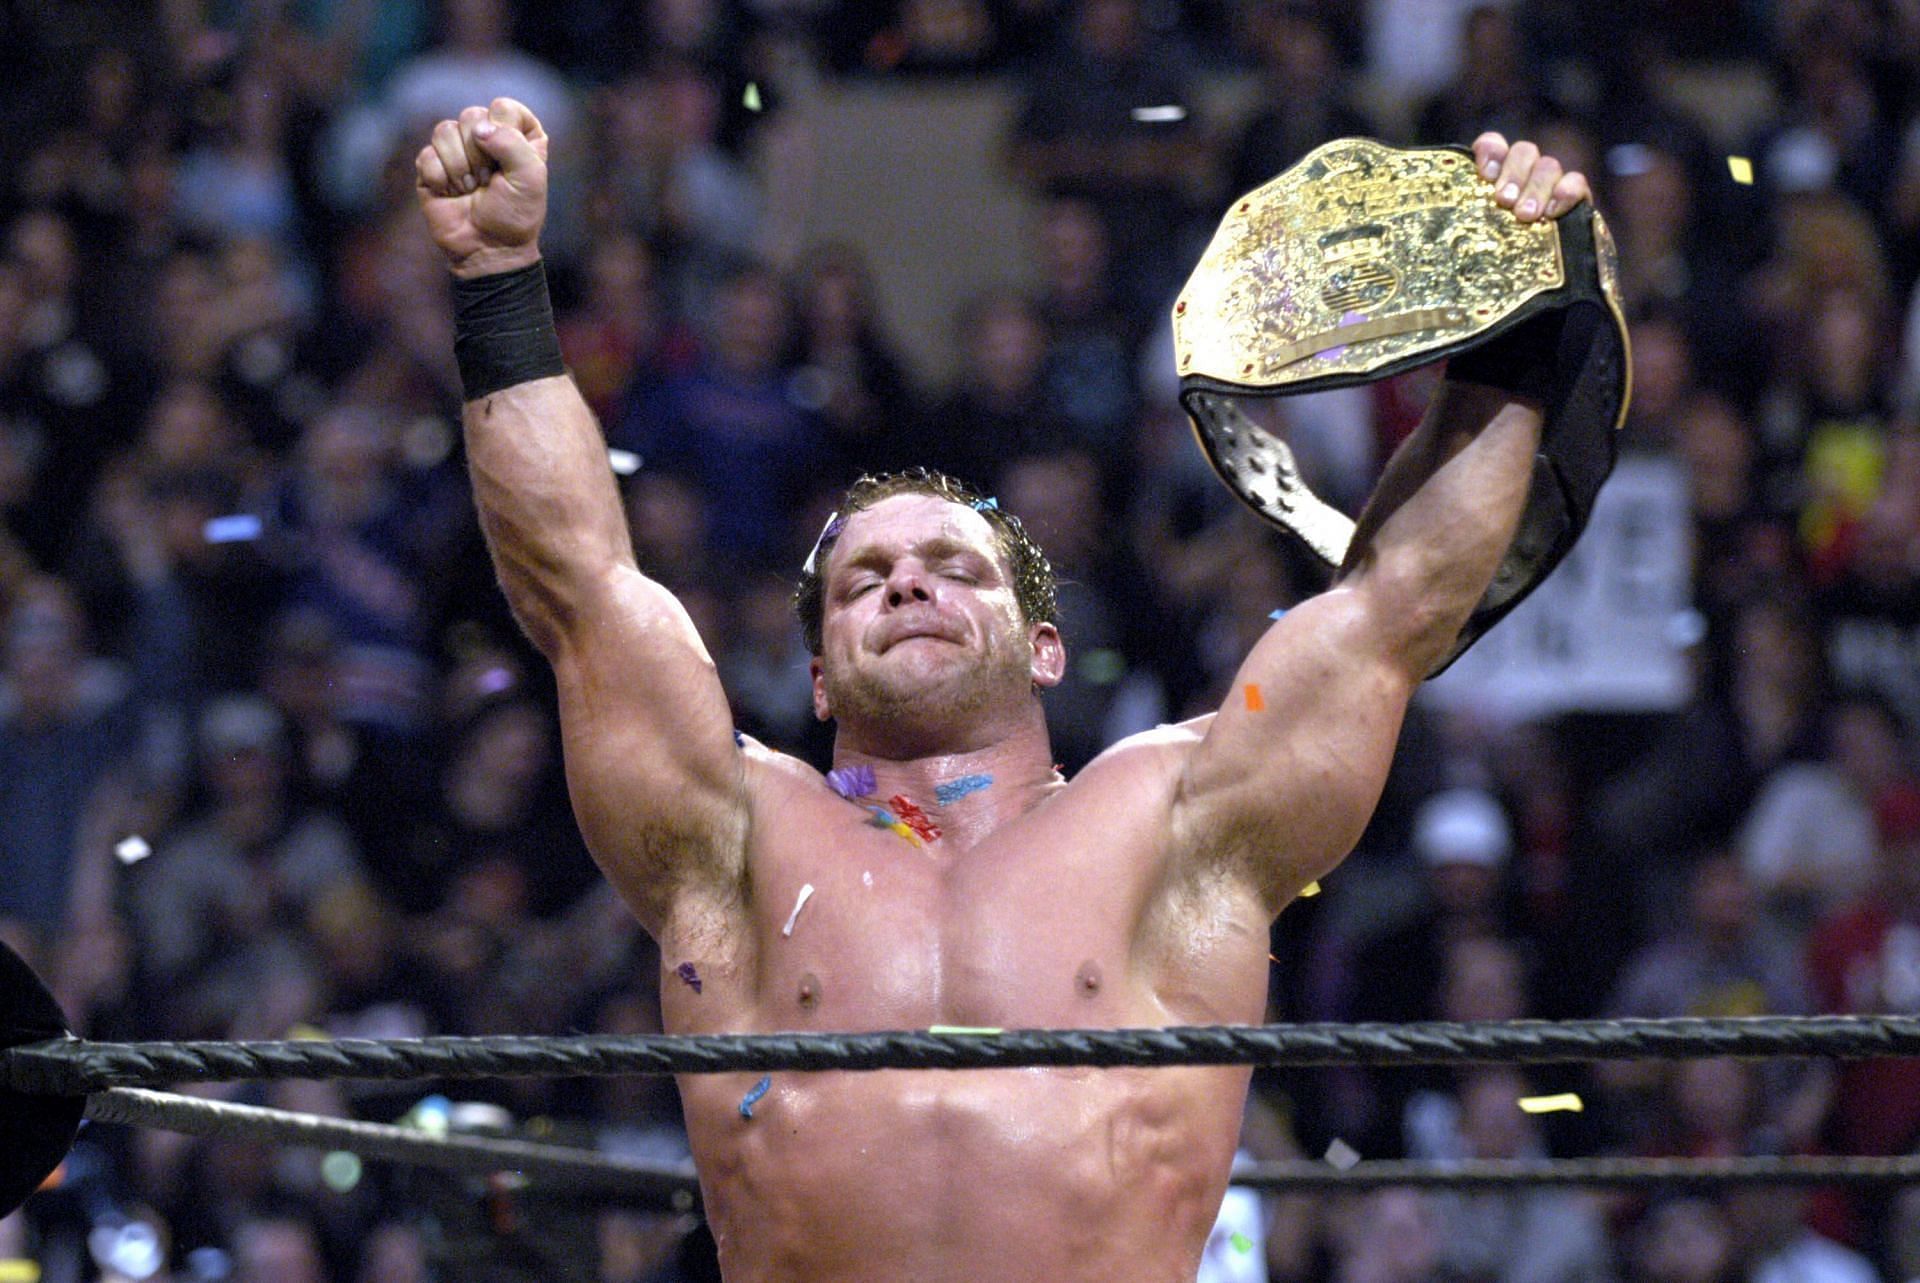 Chris Benoit won the Rumble in 2004.